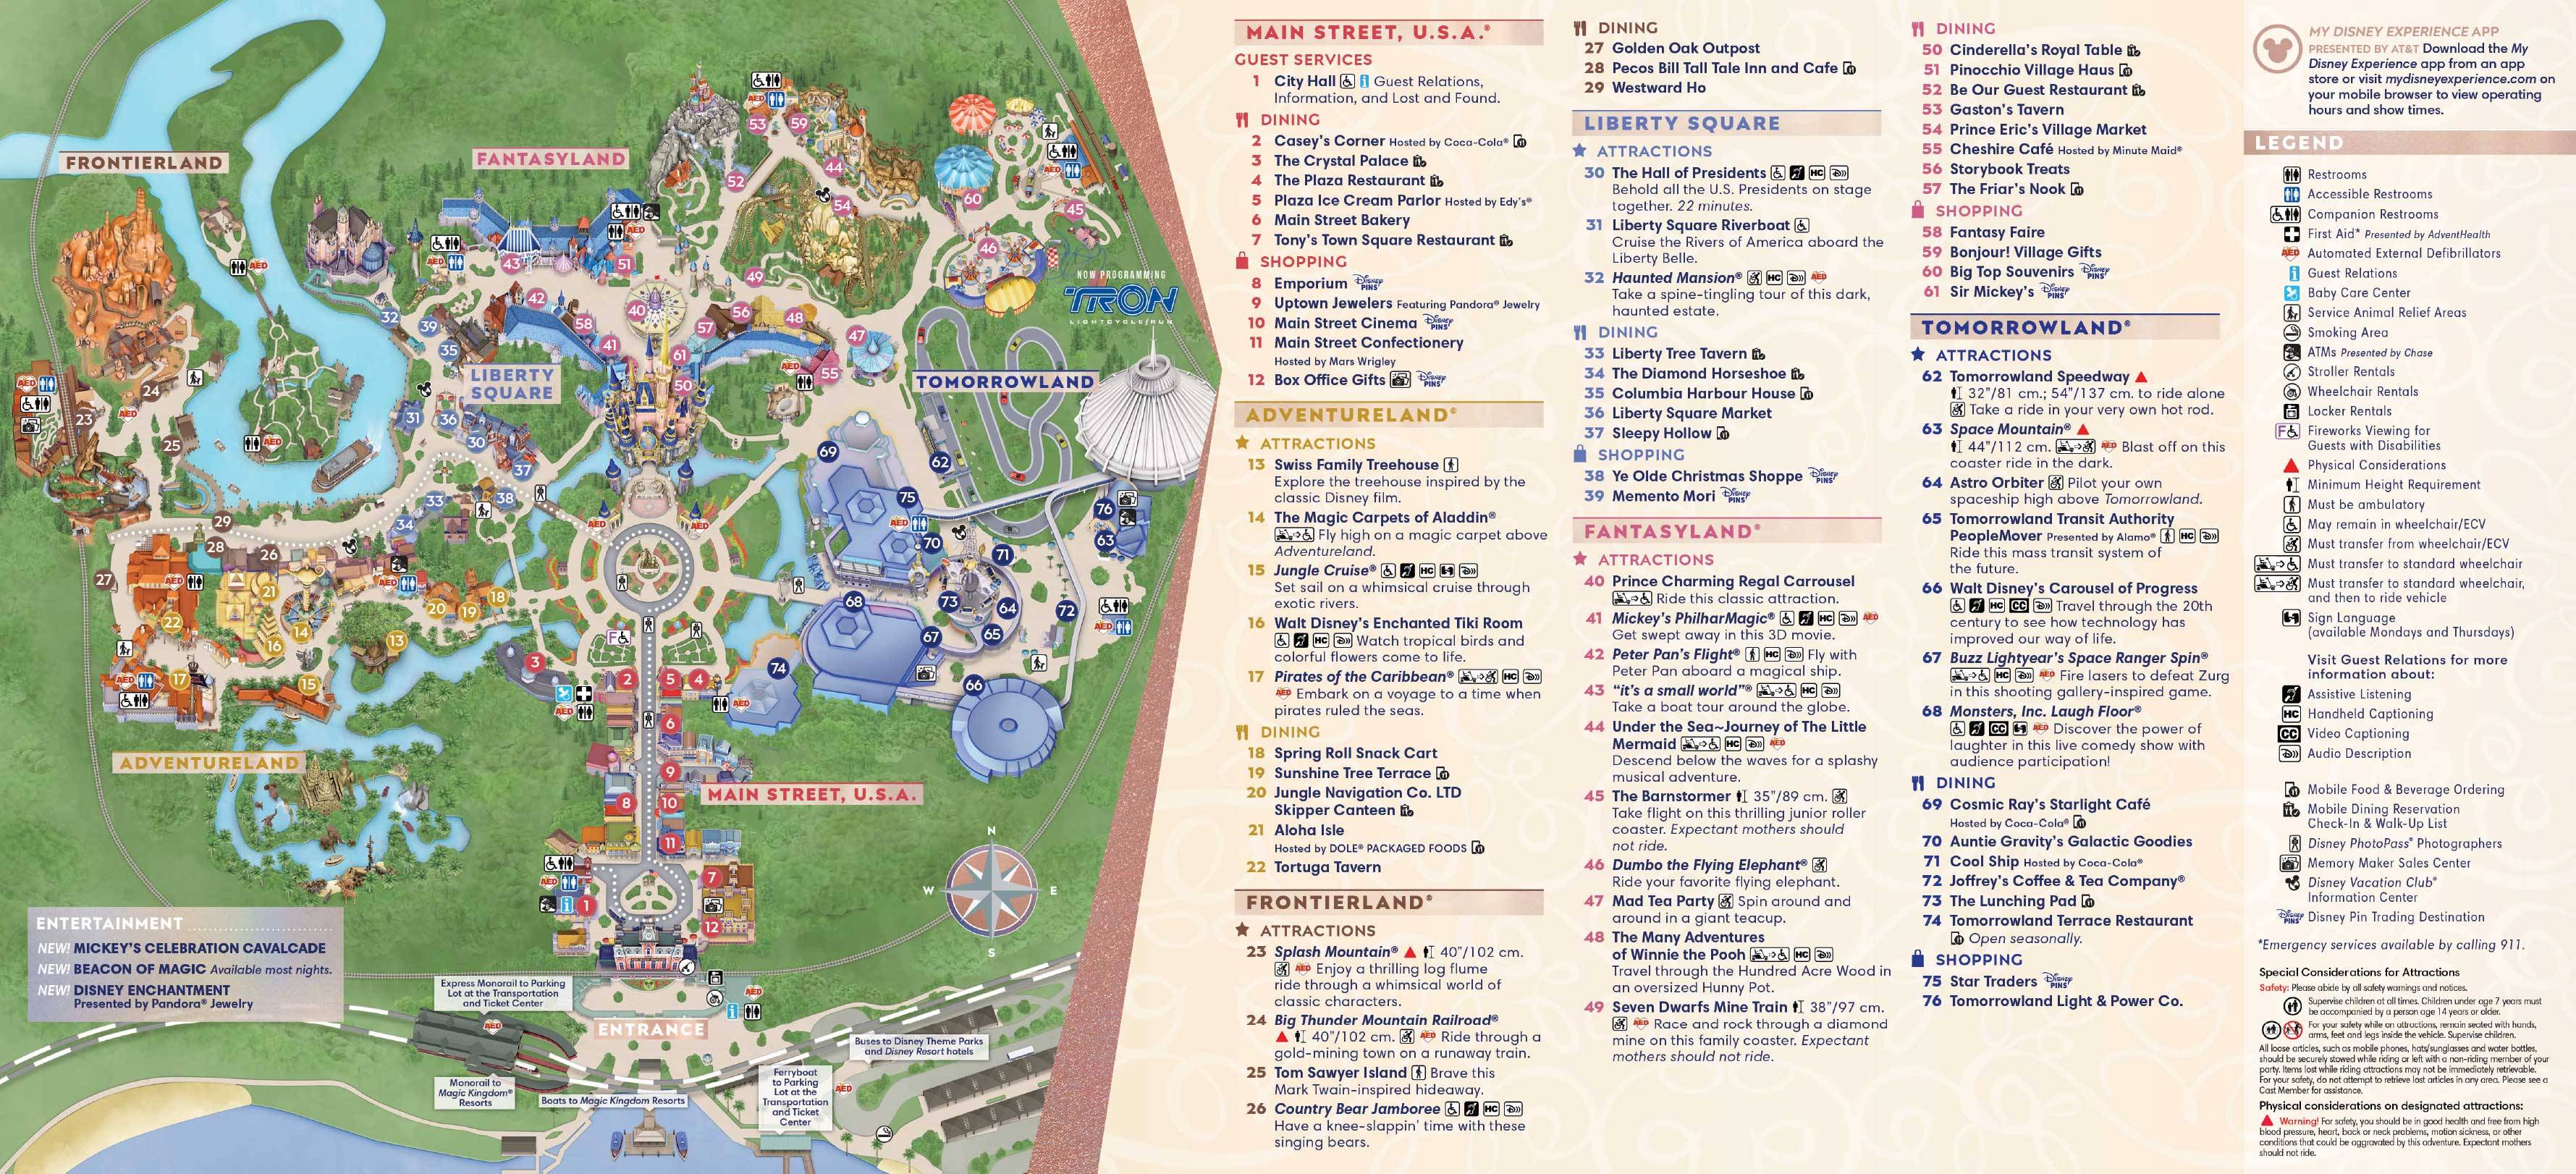 Walt Disney World 50th anniversary map - Magic Kingdom back